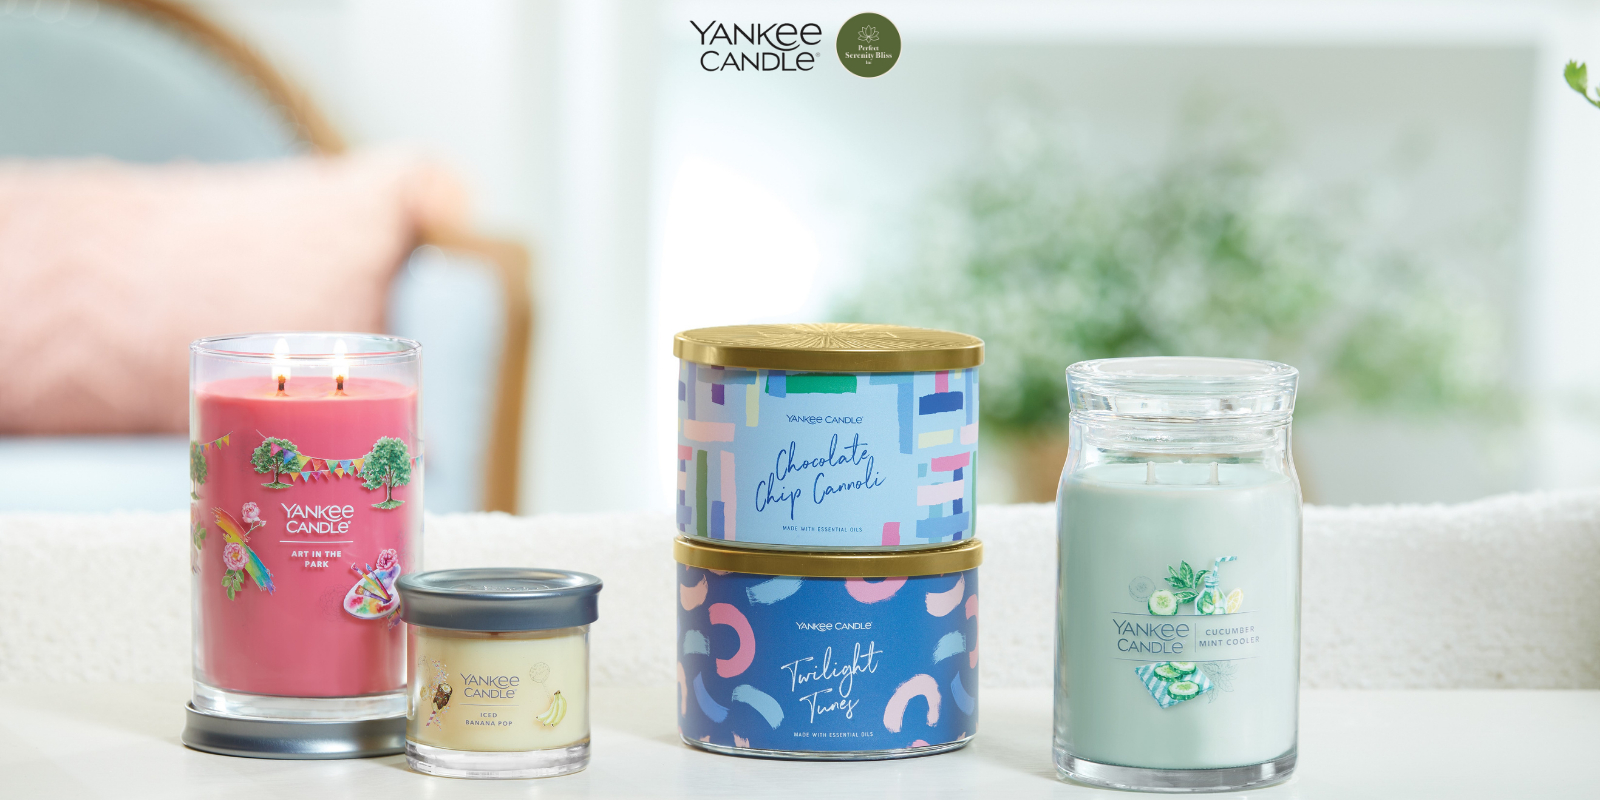 Yankee Candle Paper Jar Air Freshener - Pink Sands - 4 Pack